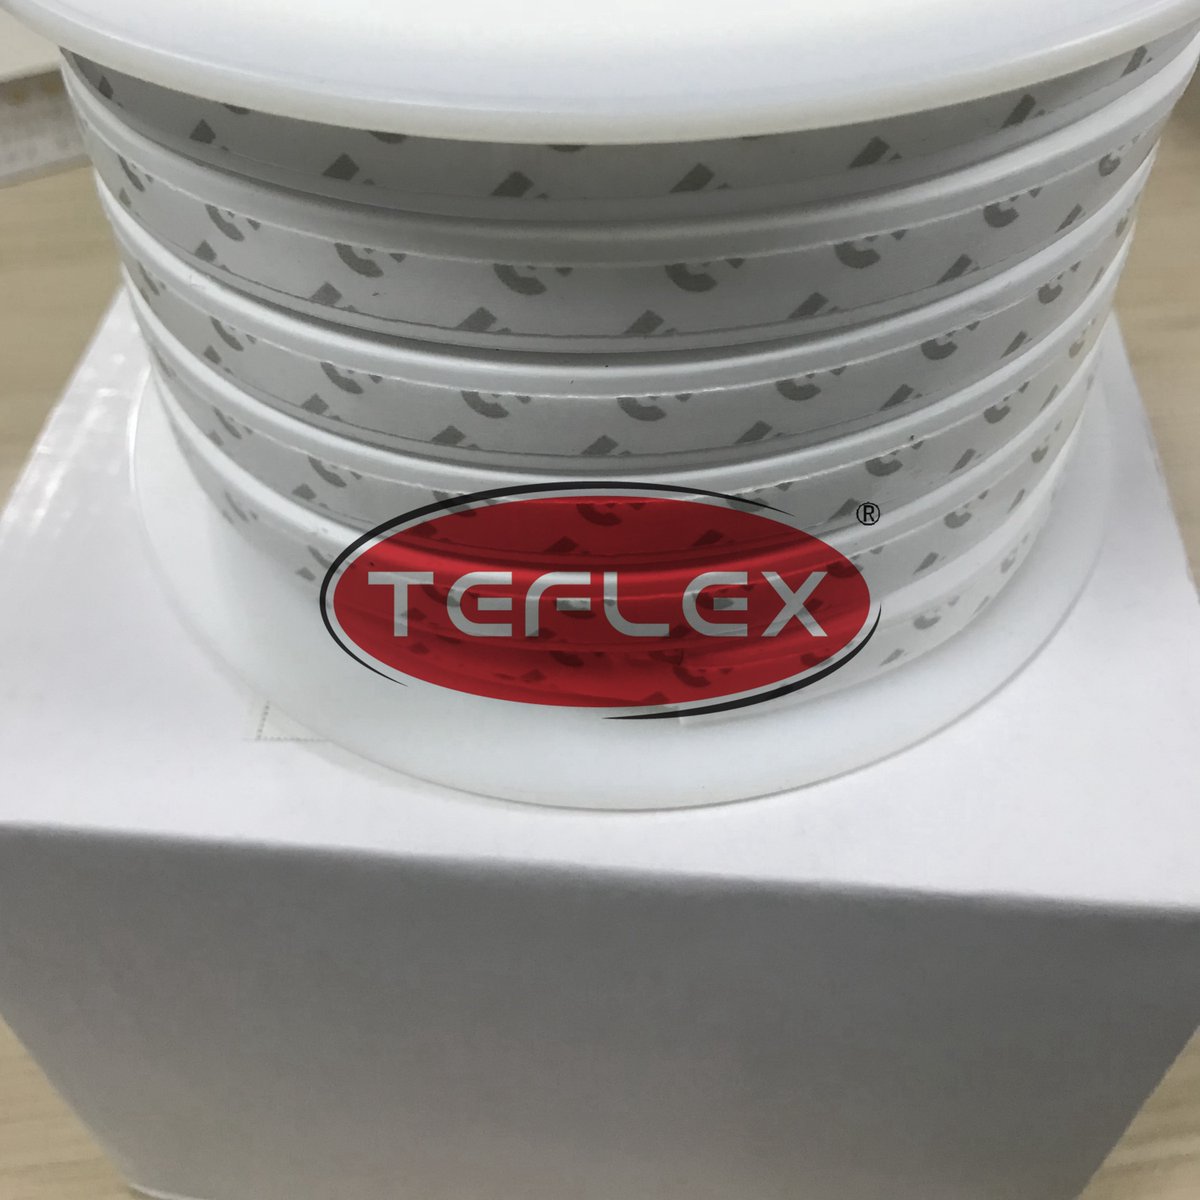 Teflex Hot product-----Eptfe Joint Sealant

Please contact email: rebecca@teflexgasket.com

Whatsapp/Tel: +8615957861851

#PTFE #EPTFE #SEAL #oilandgas #medica #bridge #machine